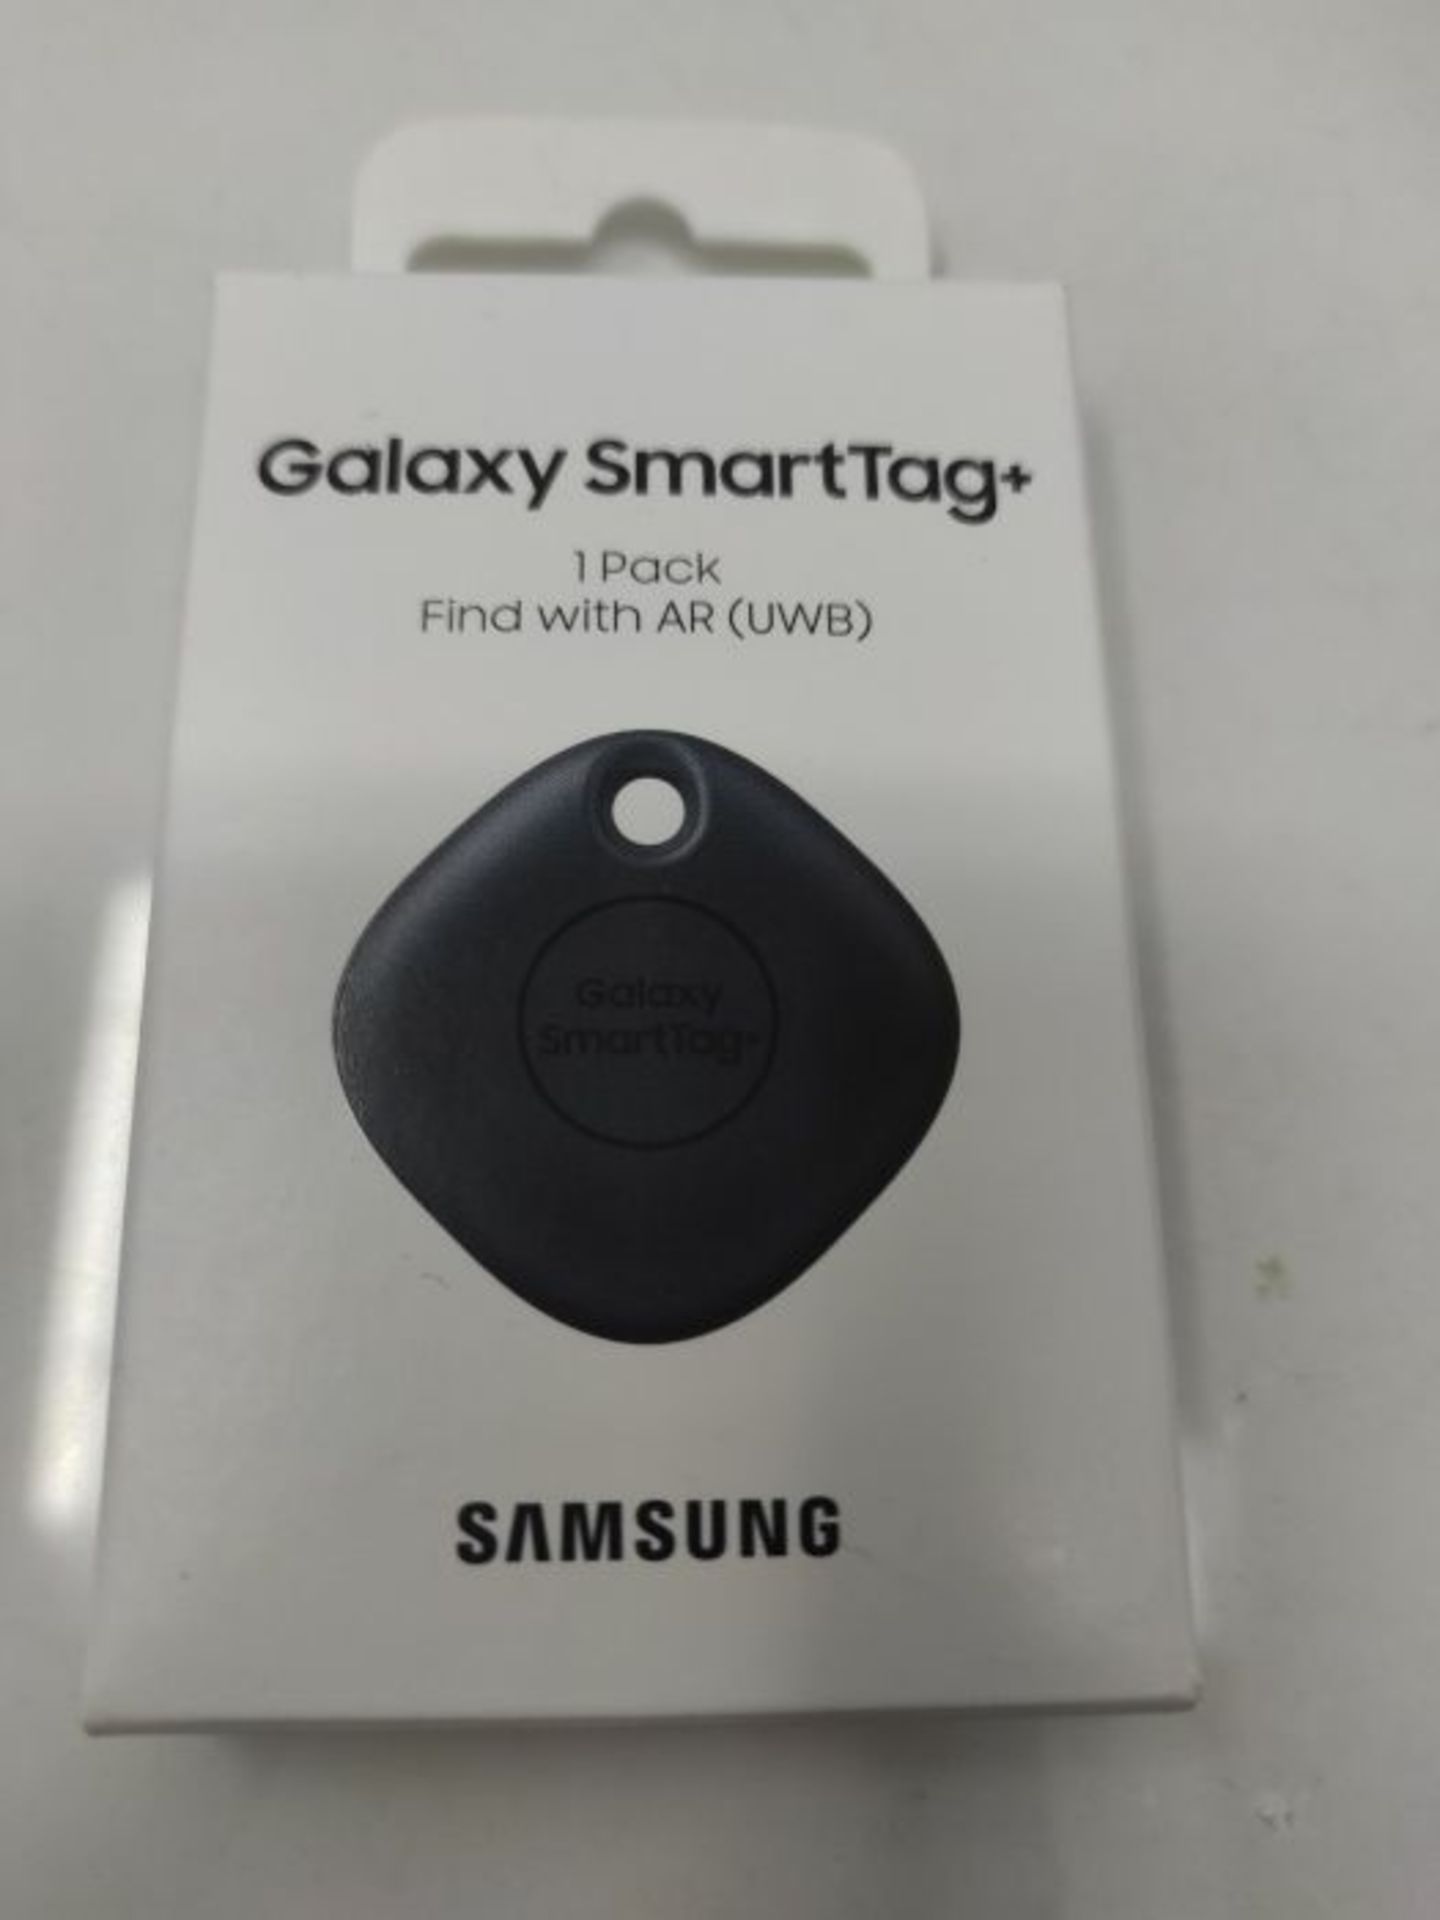 Samsung Galaxy SmartTag+ EI-T7300, Black - Image 2 of 3